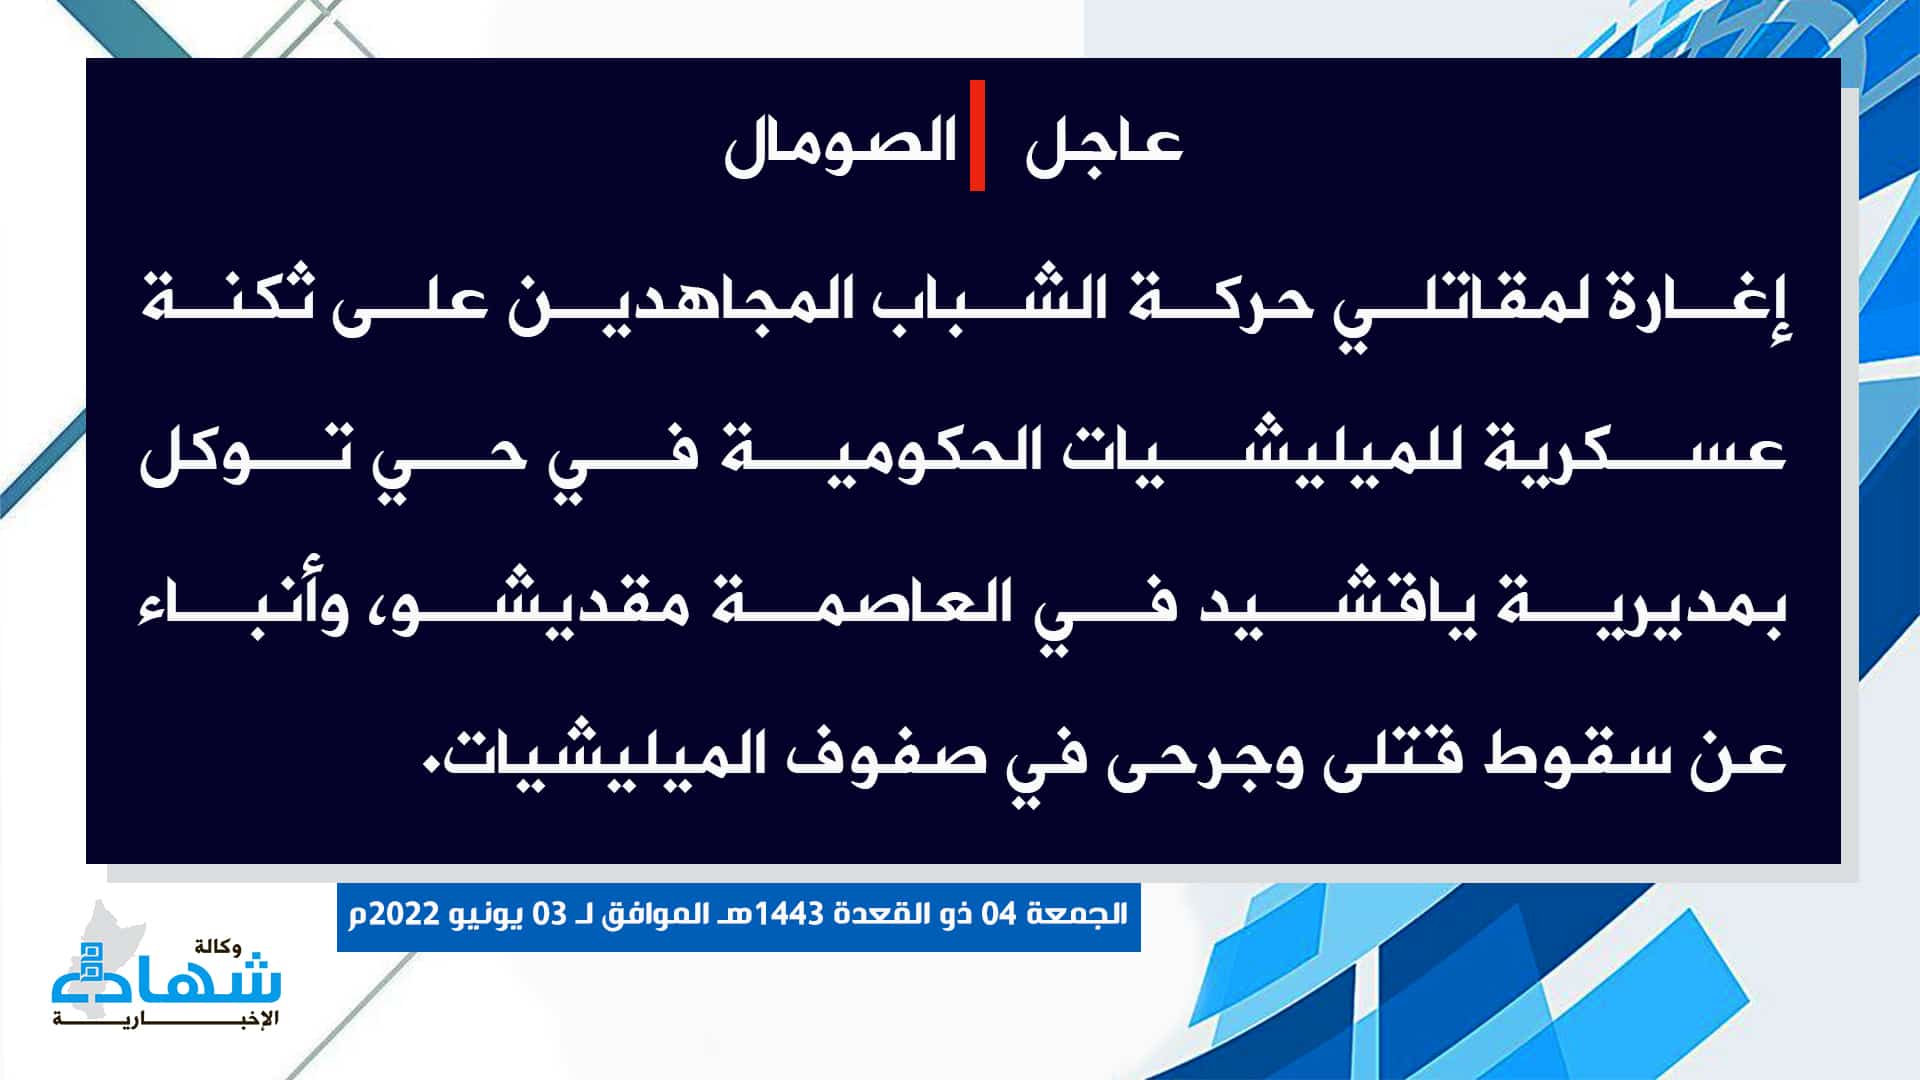 (Claim) al-Shabaab: Mujahideen Attacked Somalian Forces Position in Tawkal District, Yaqshid, Mogadishu, Somalia - 3 June 2022